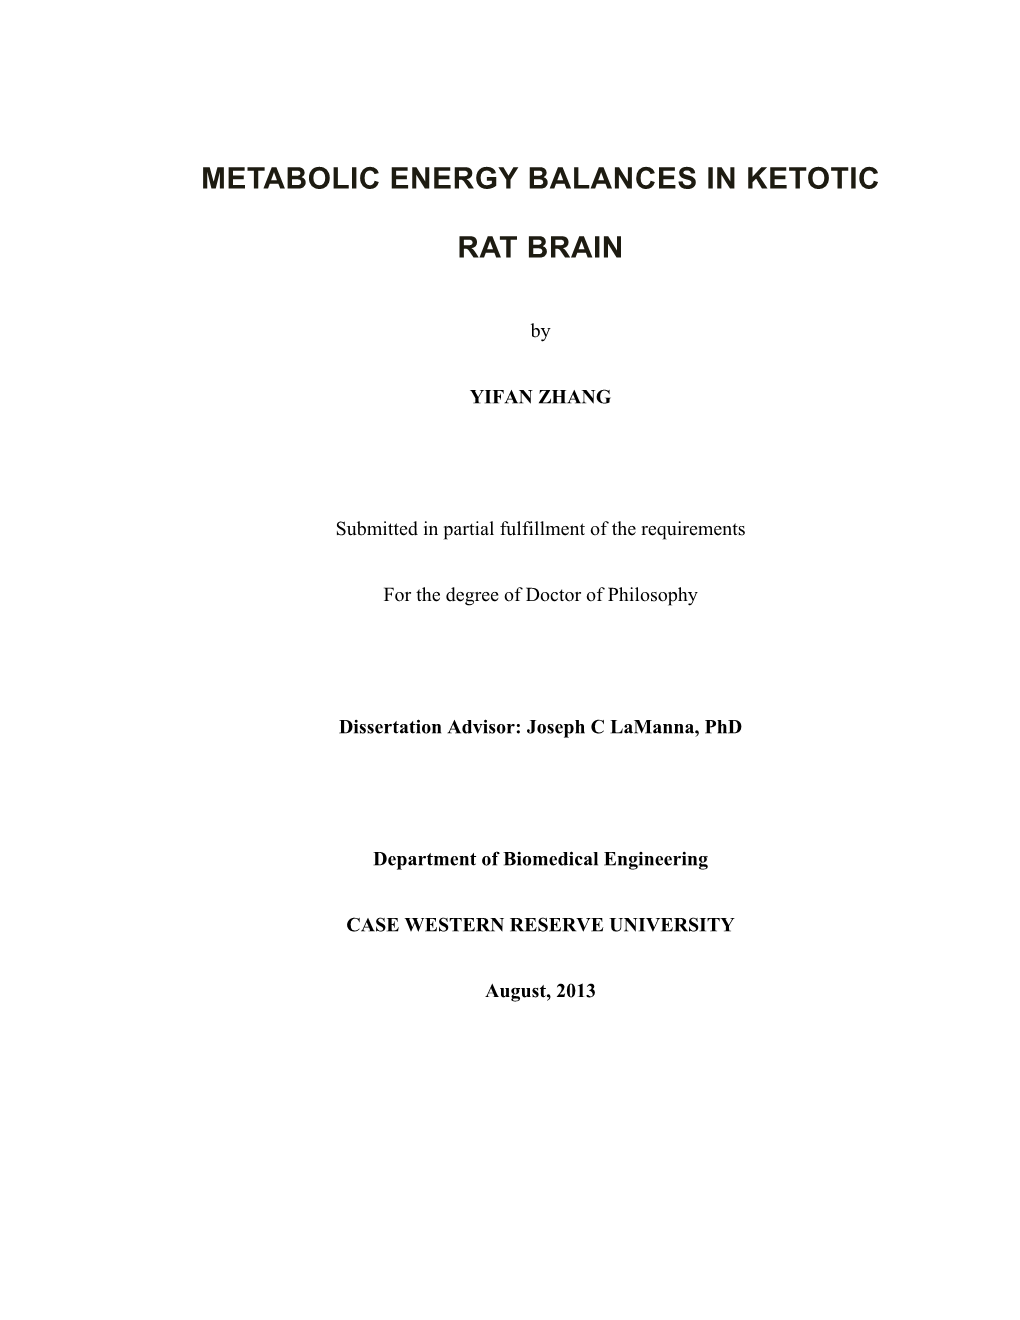 Zhang Metabolic Energy Balances in Ketotic Rat